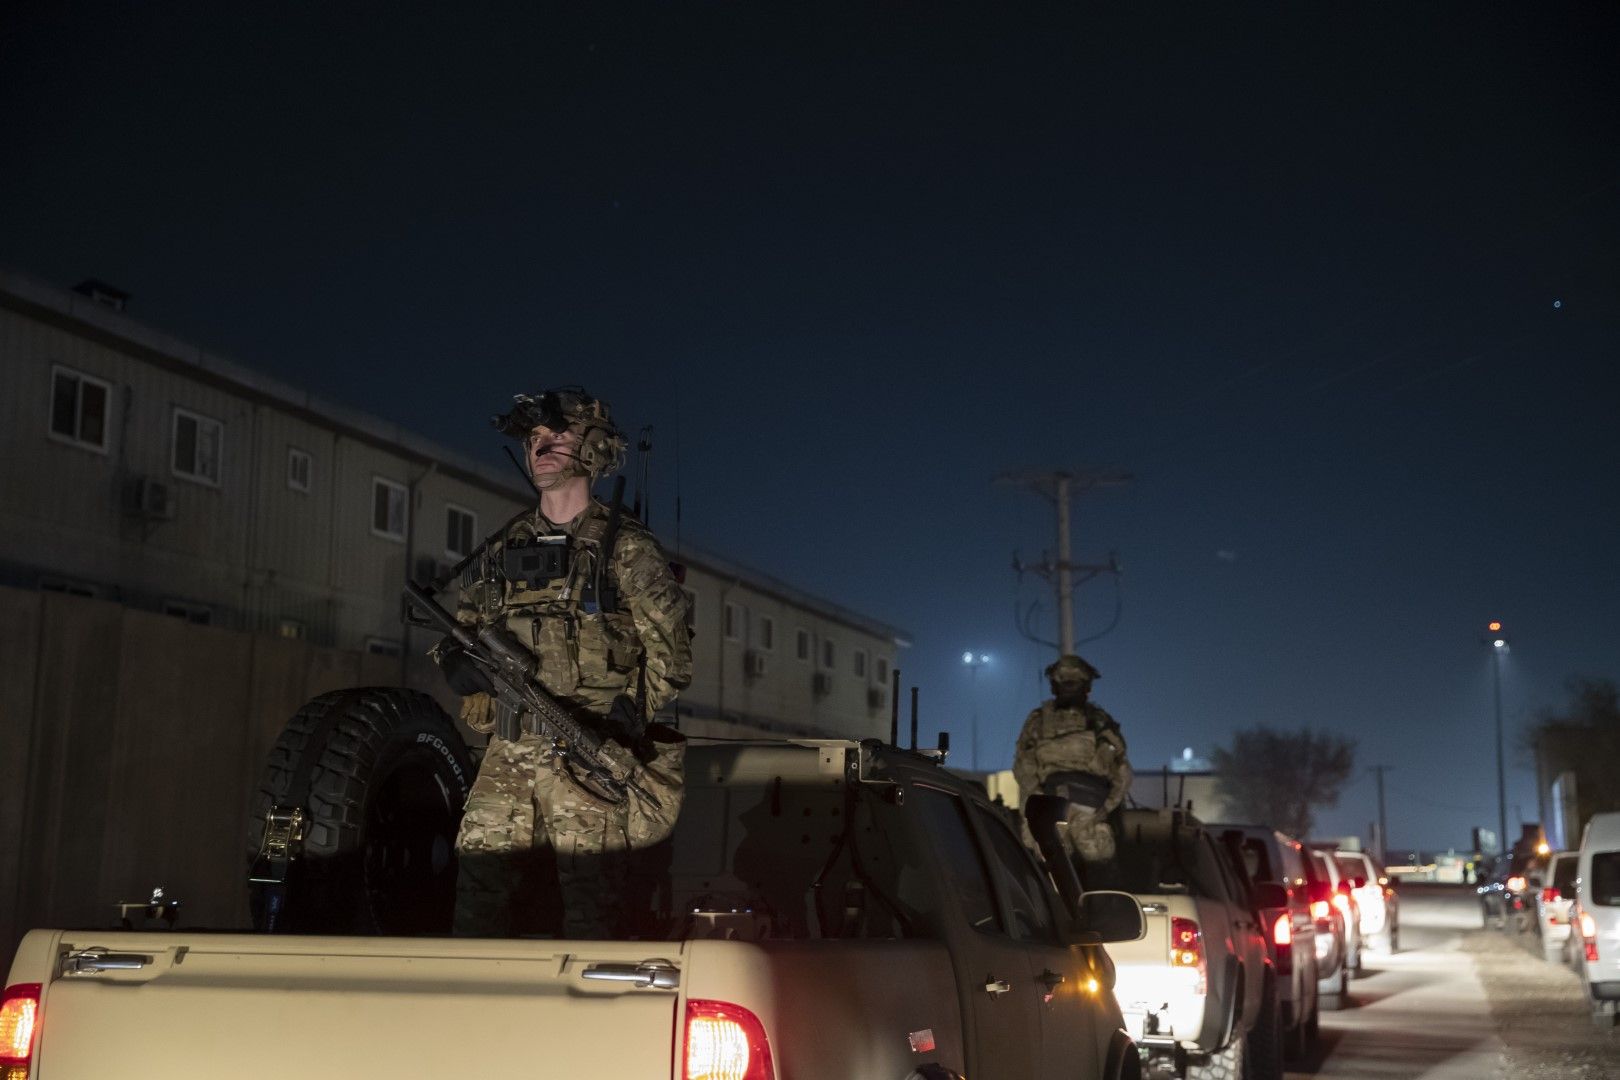 Числеността на американския военен контингент в Афганистан достигна пик от над 100 000 души през 2011 г.